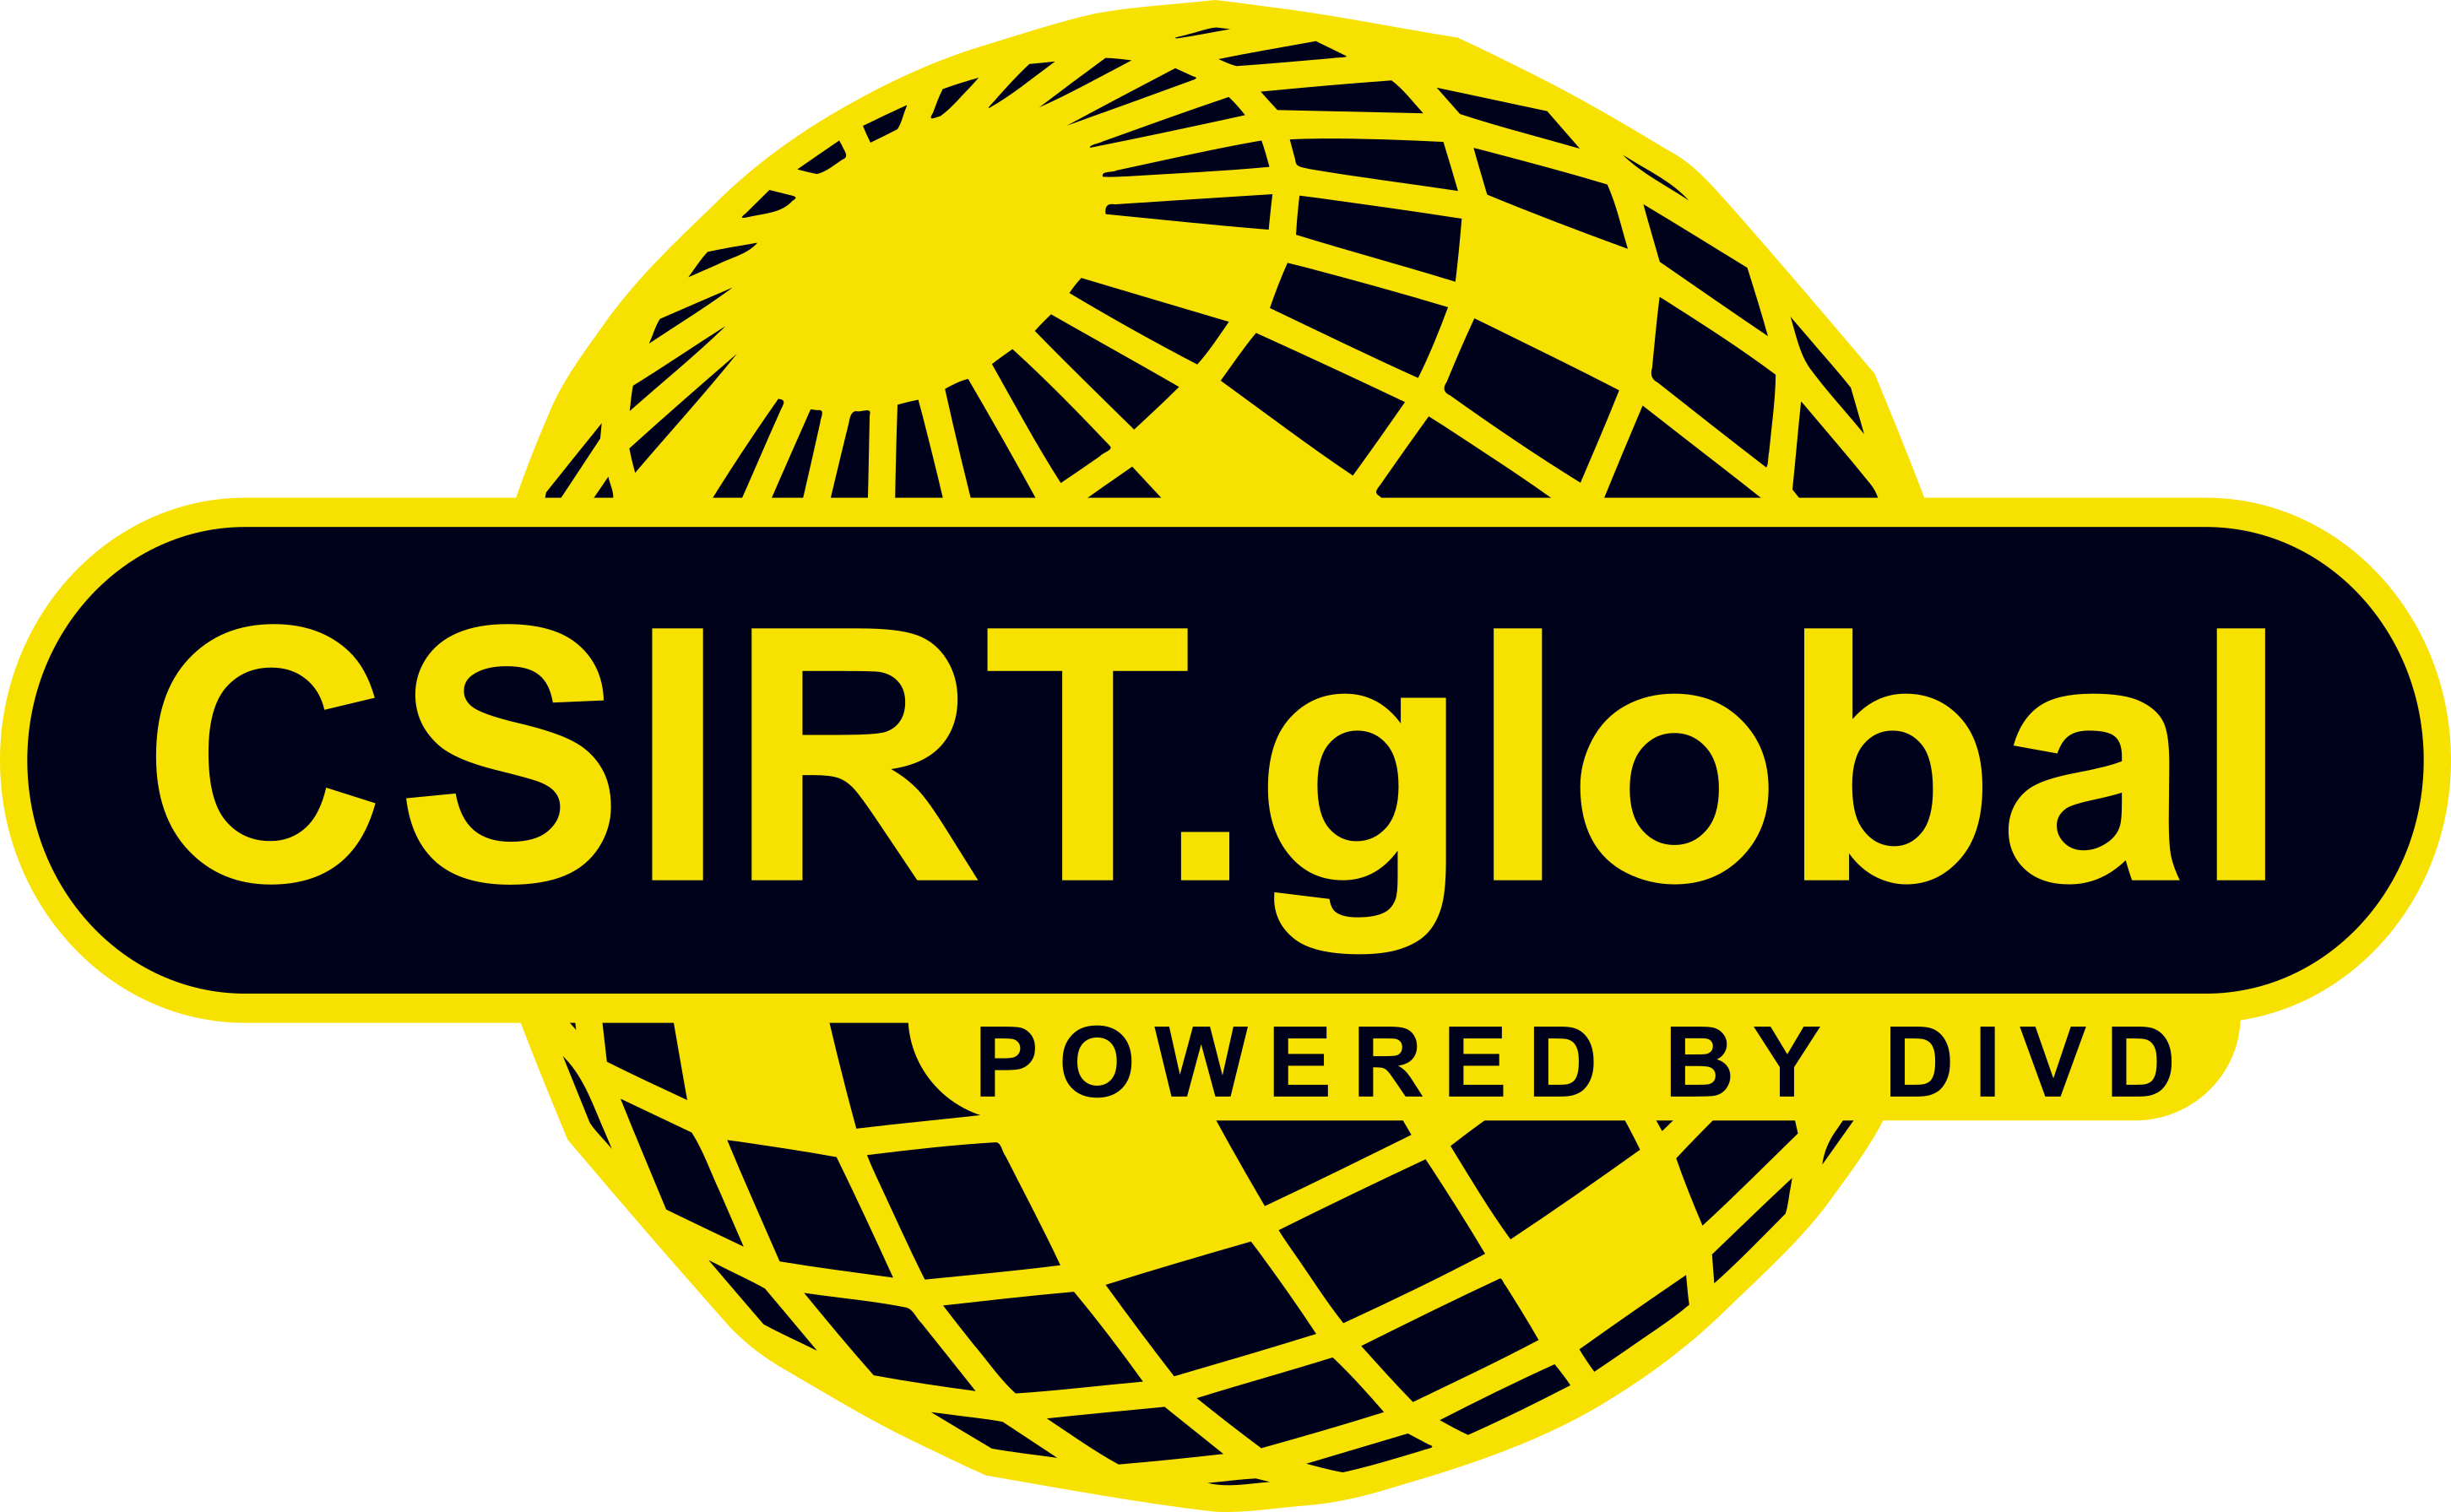 CSIRT Global logo